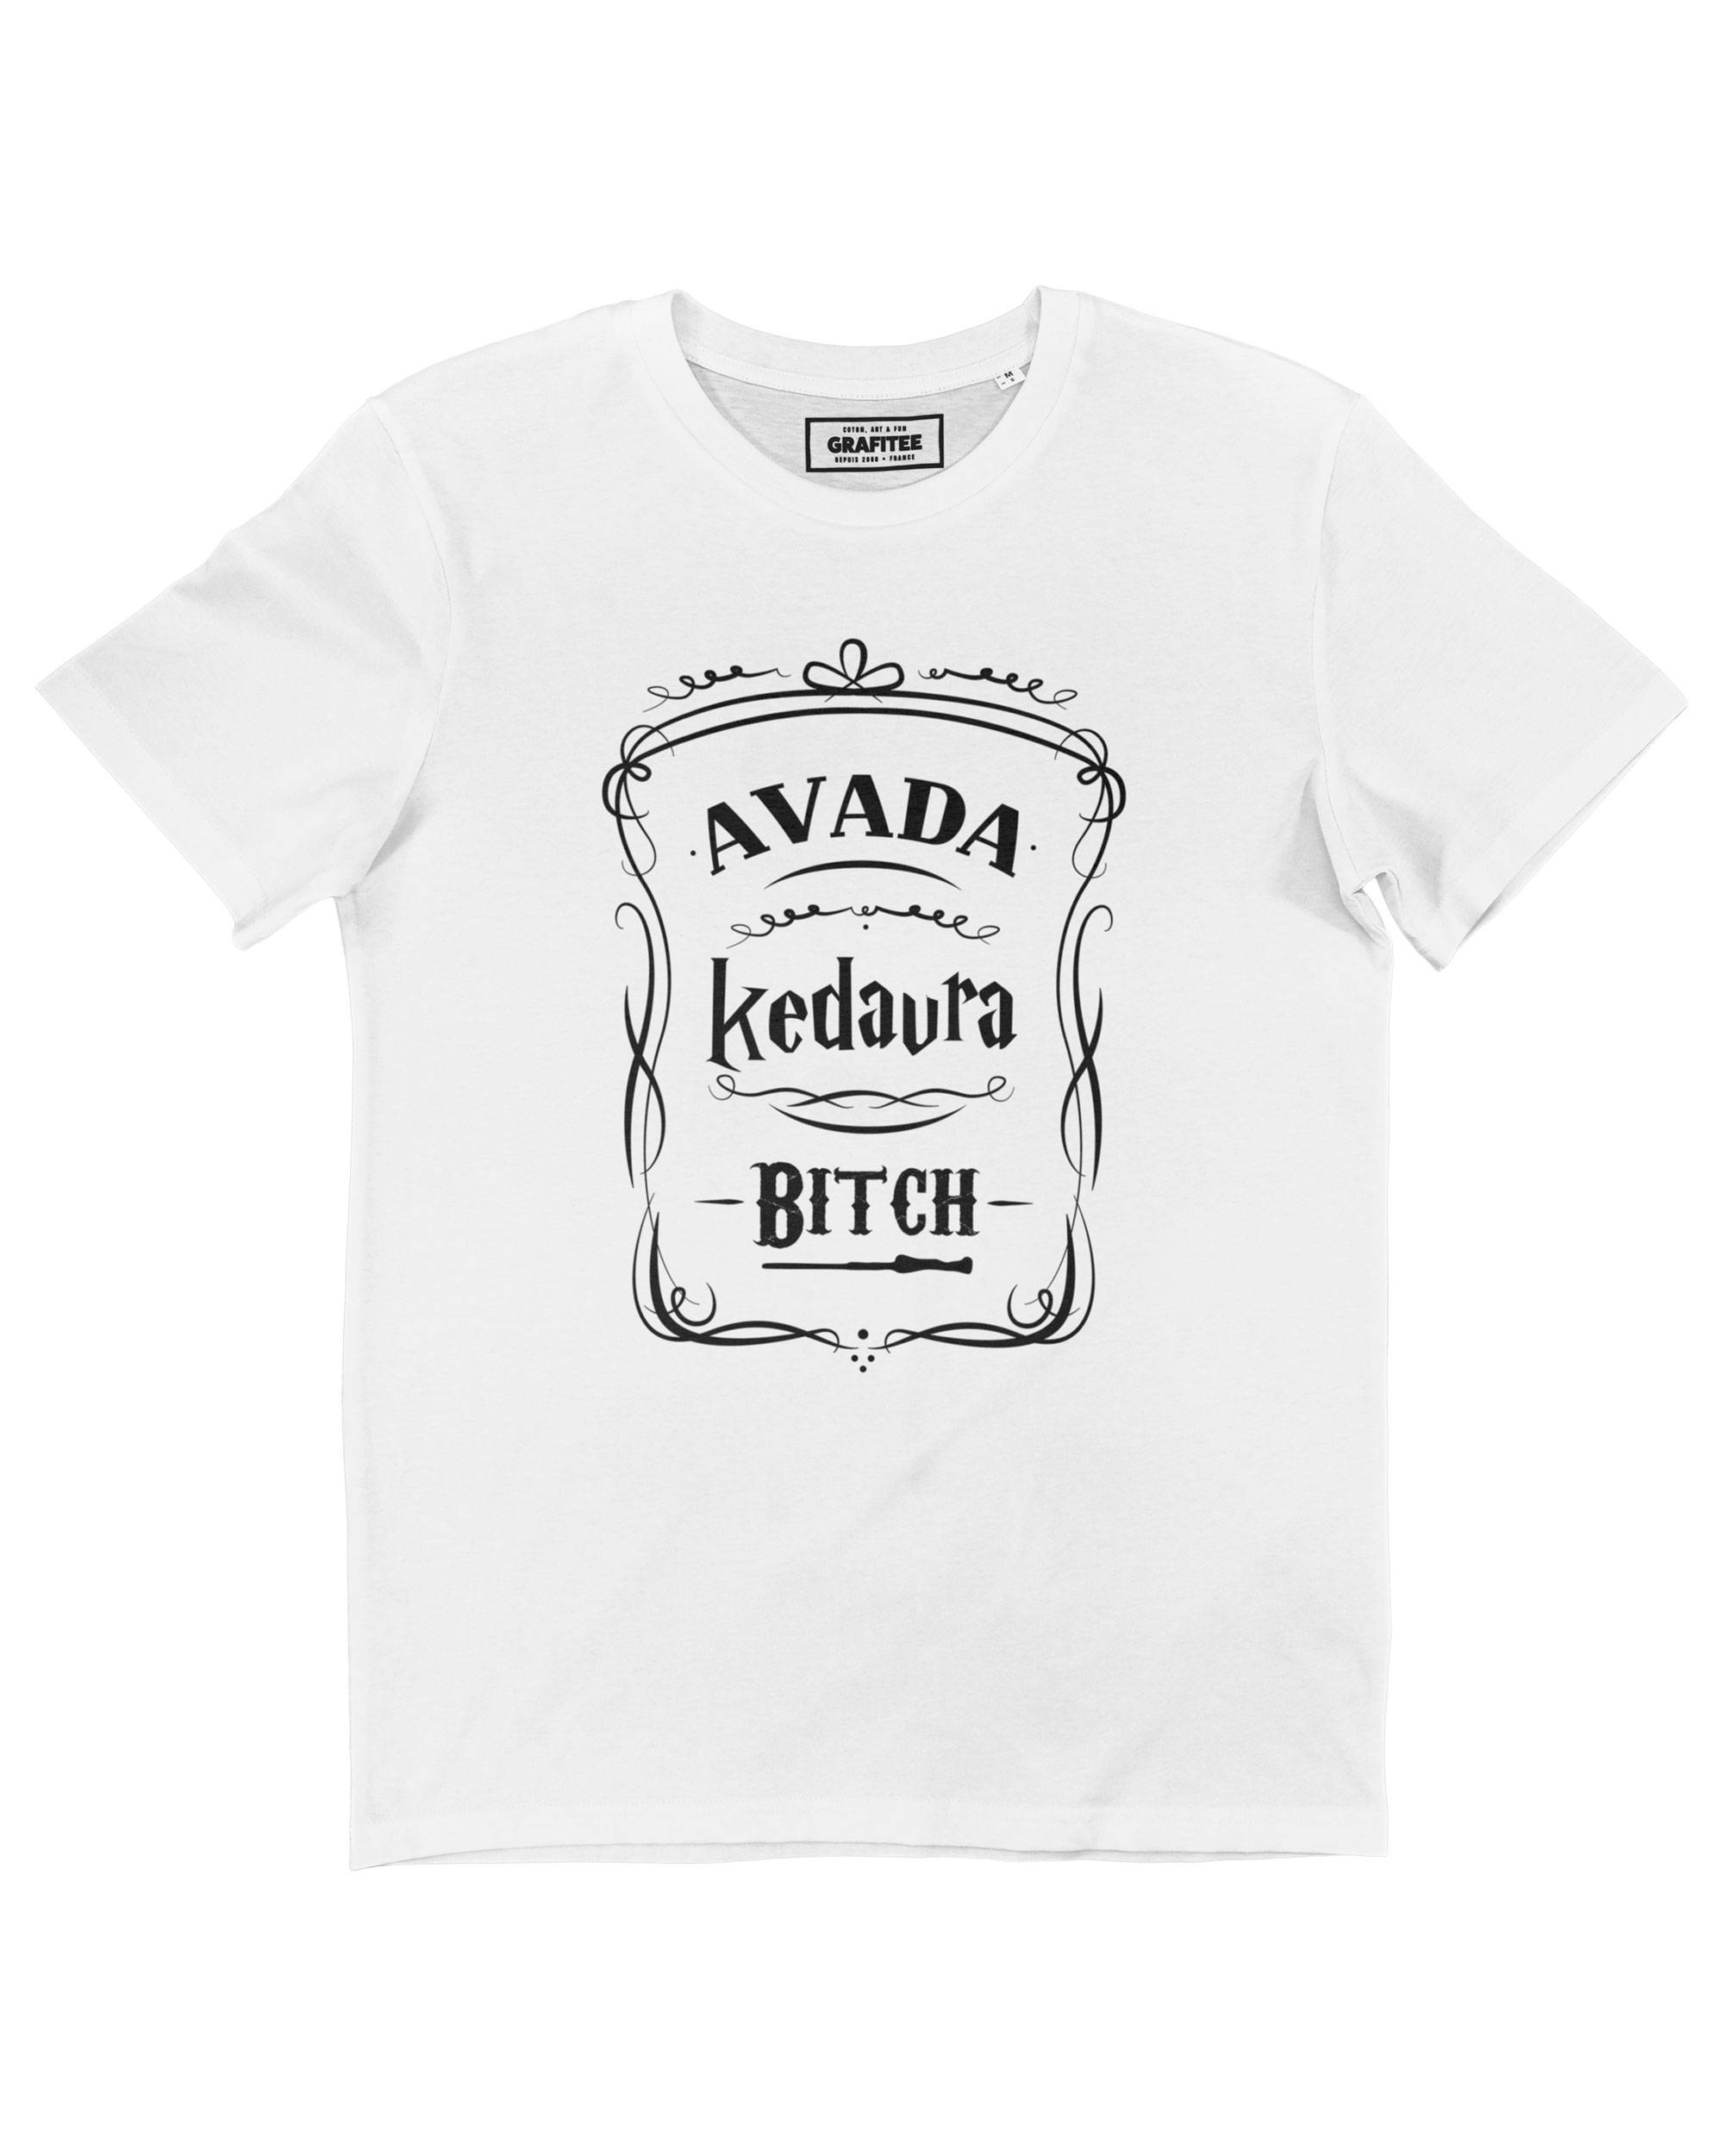 T-shirt Avada Kedavra Bitch Grafitee